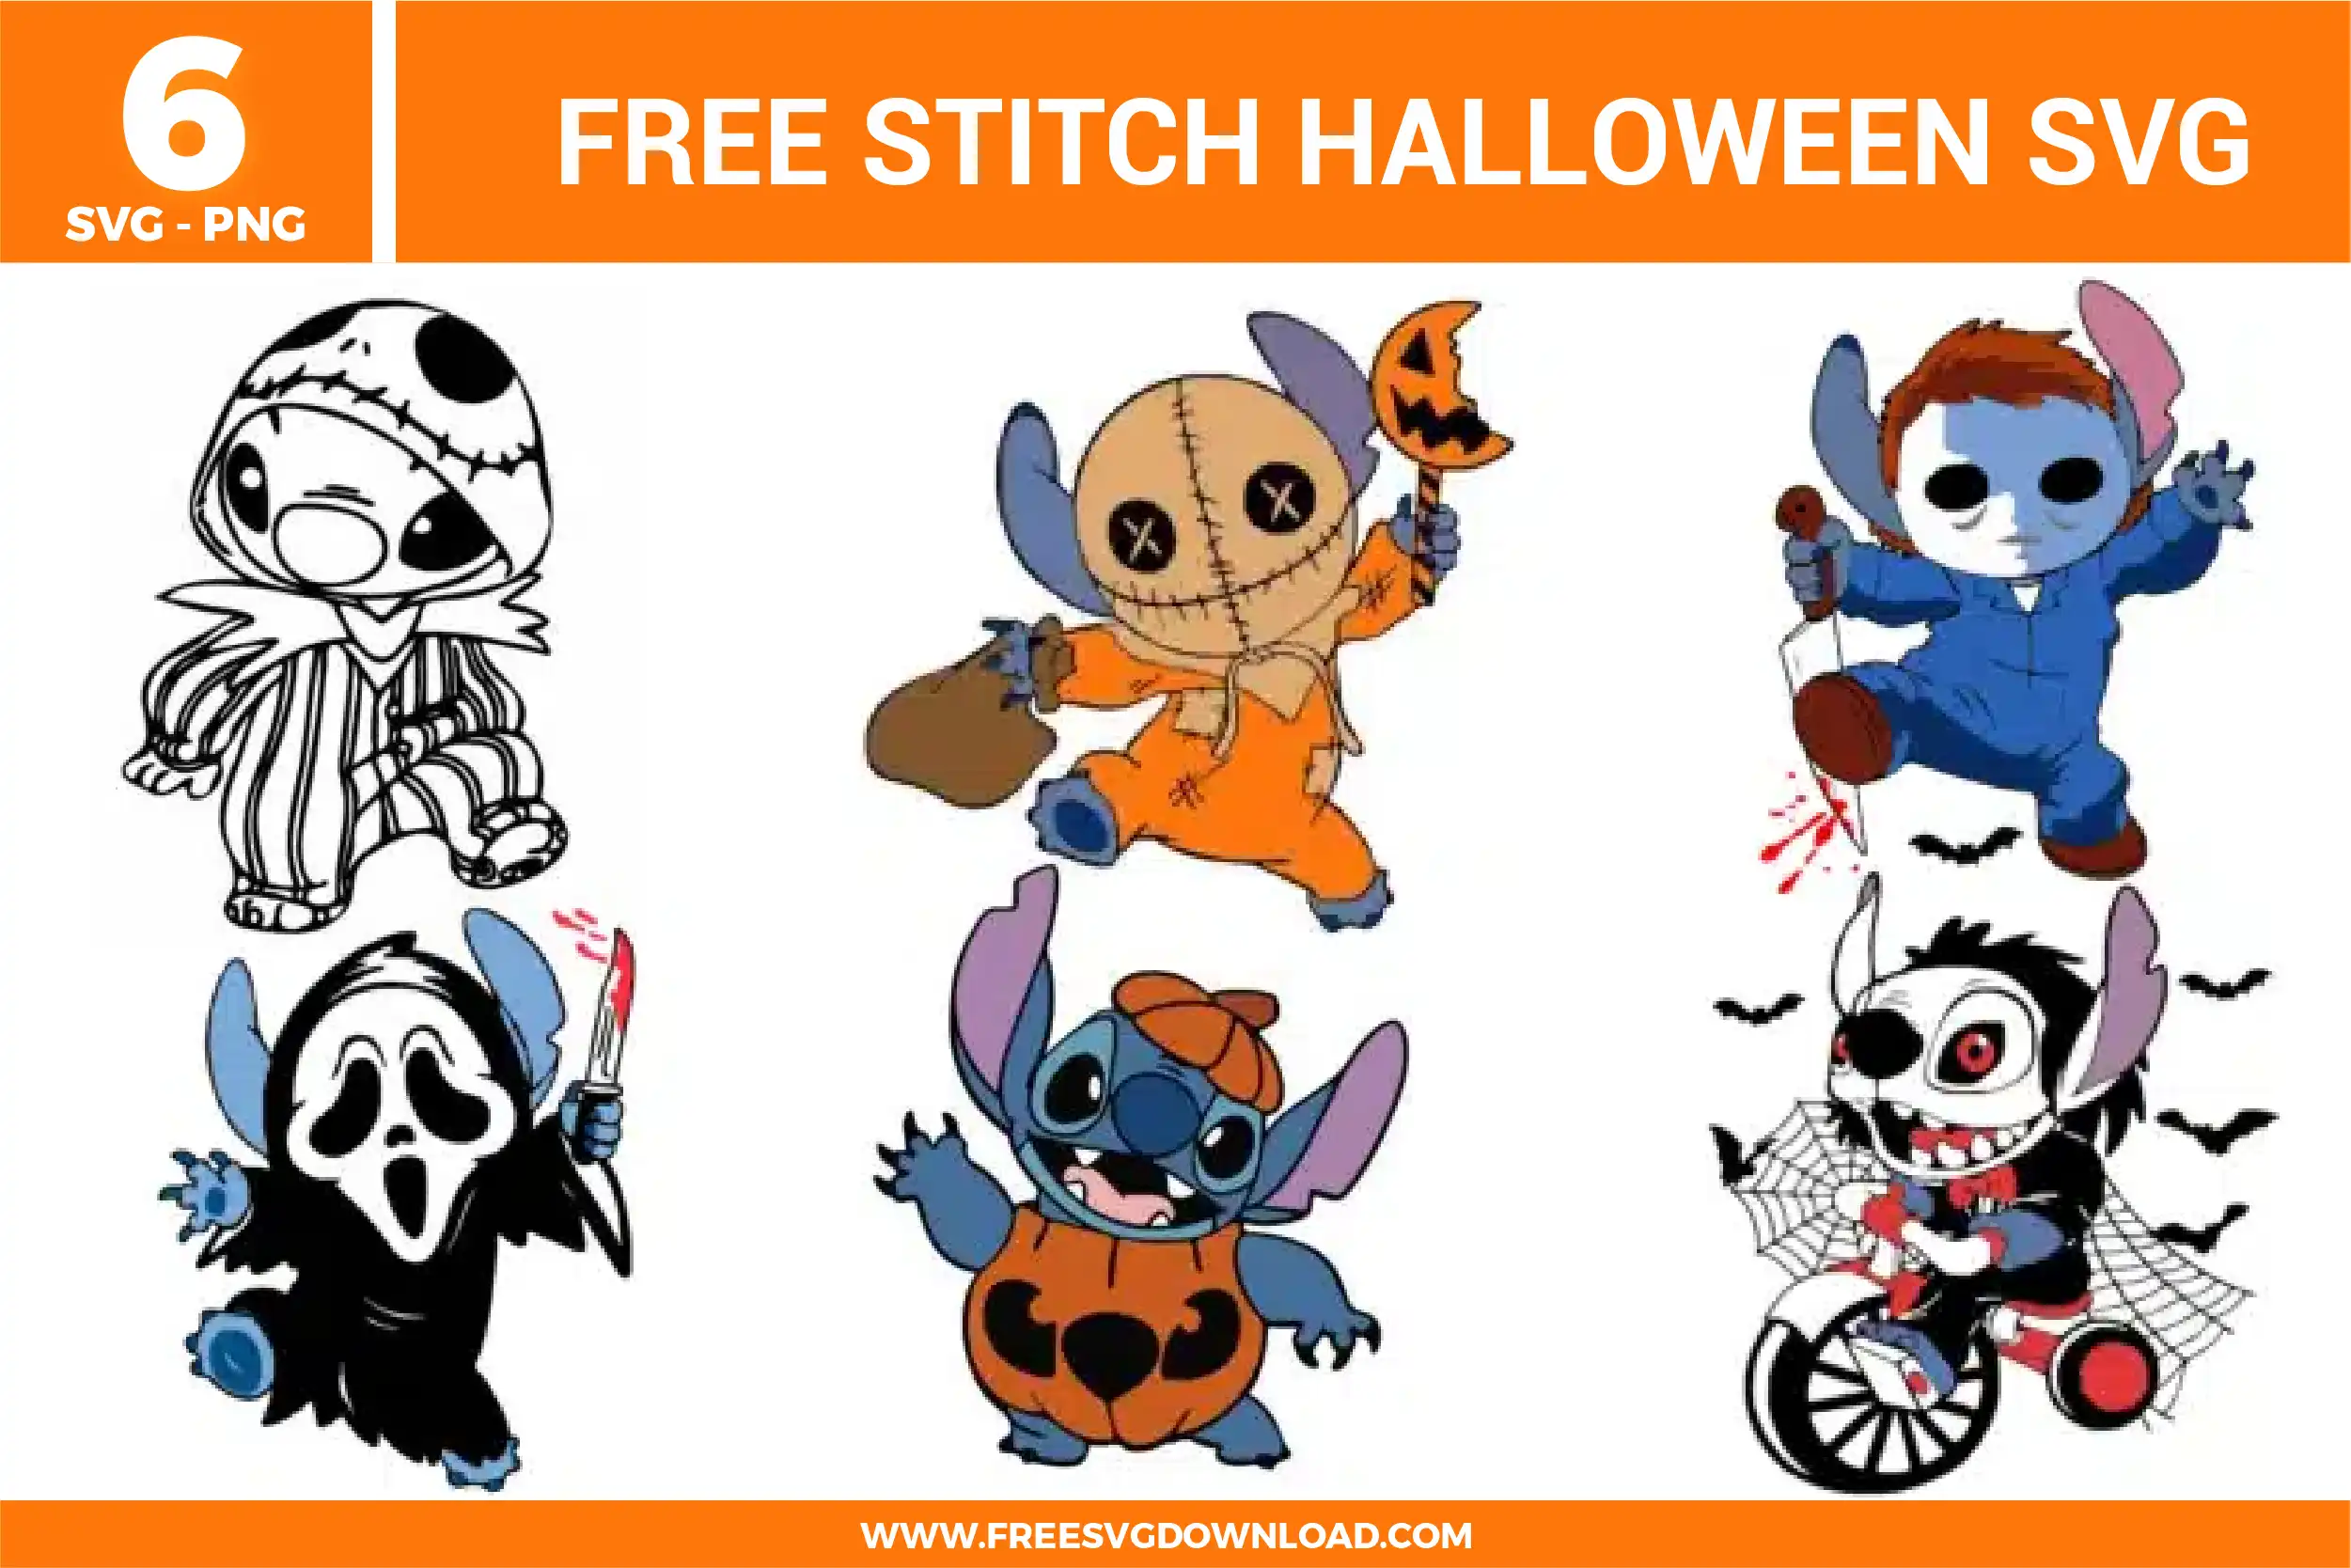 Stitch Halloween Free SVG Files